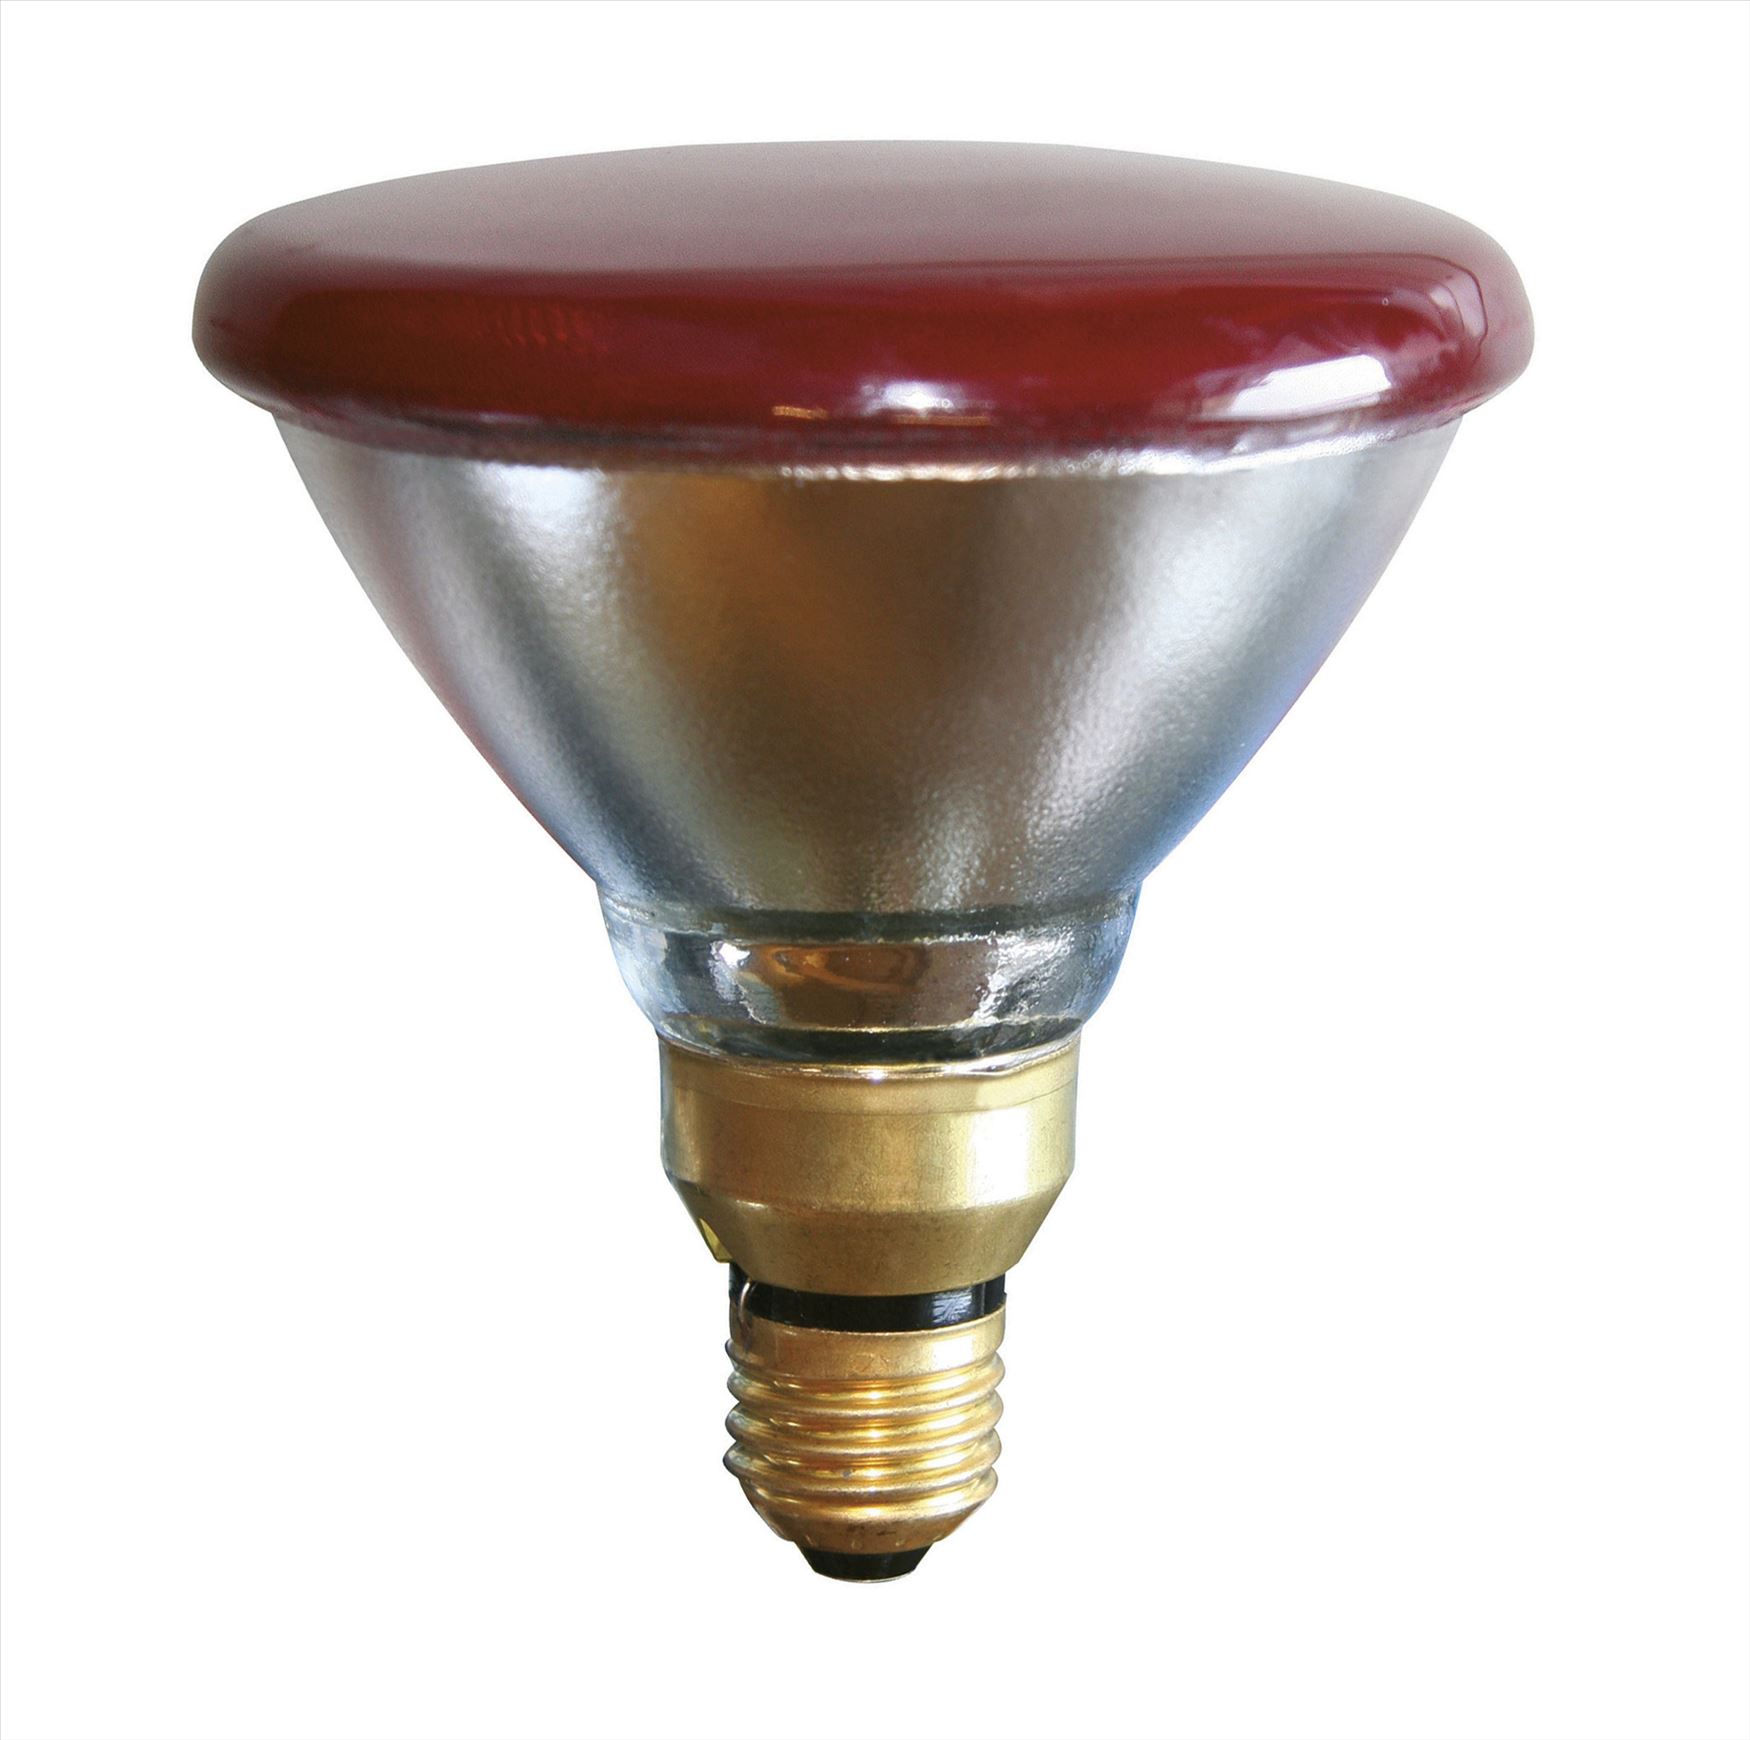 Kerbl INFRAROSSI LAMPADA A RISPARMIO ENERGETICO 100W SPARLAMPE KERBL COD.271688 